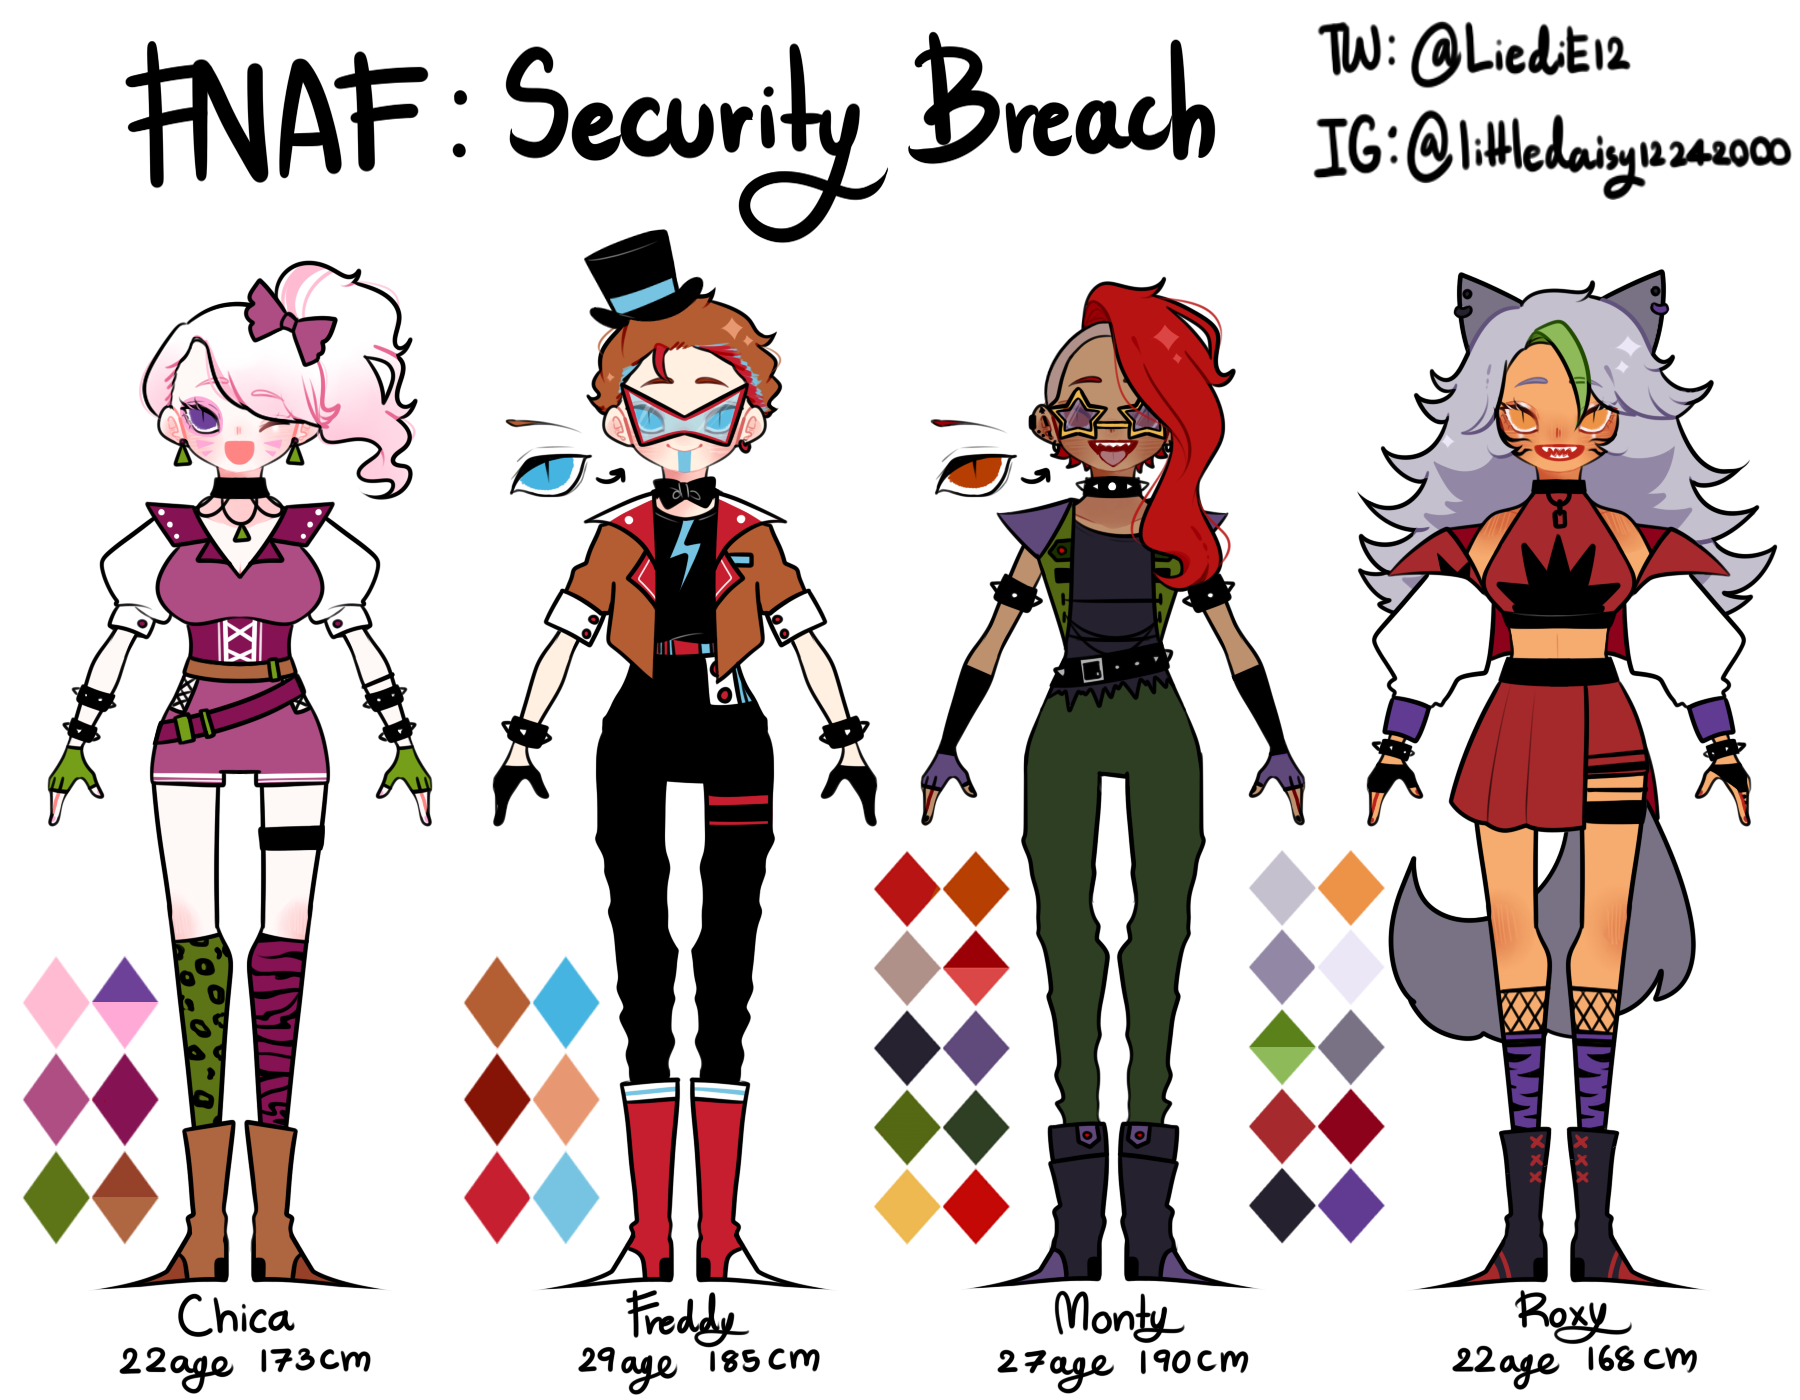 FNAF Security Breach - Human Concept by Emil-Inze on DeviantArt